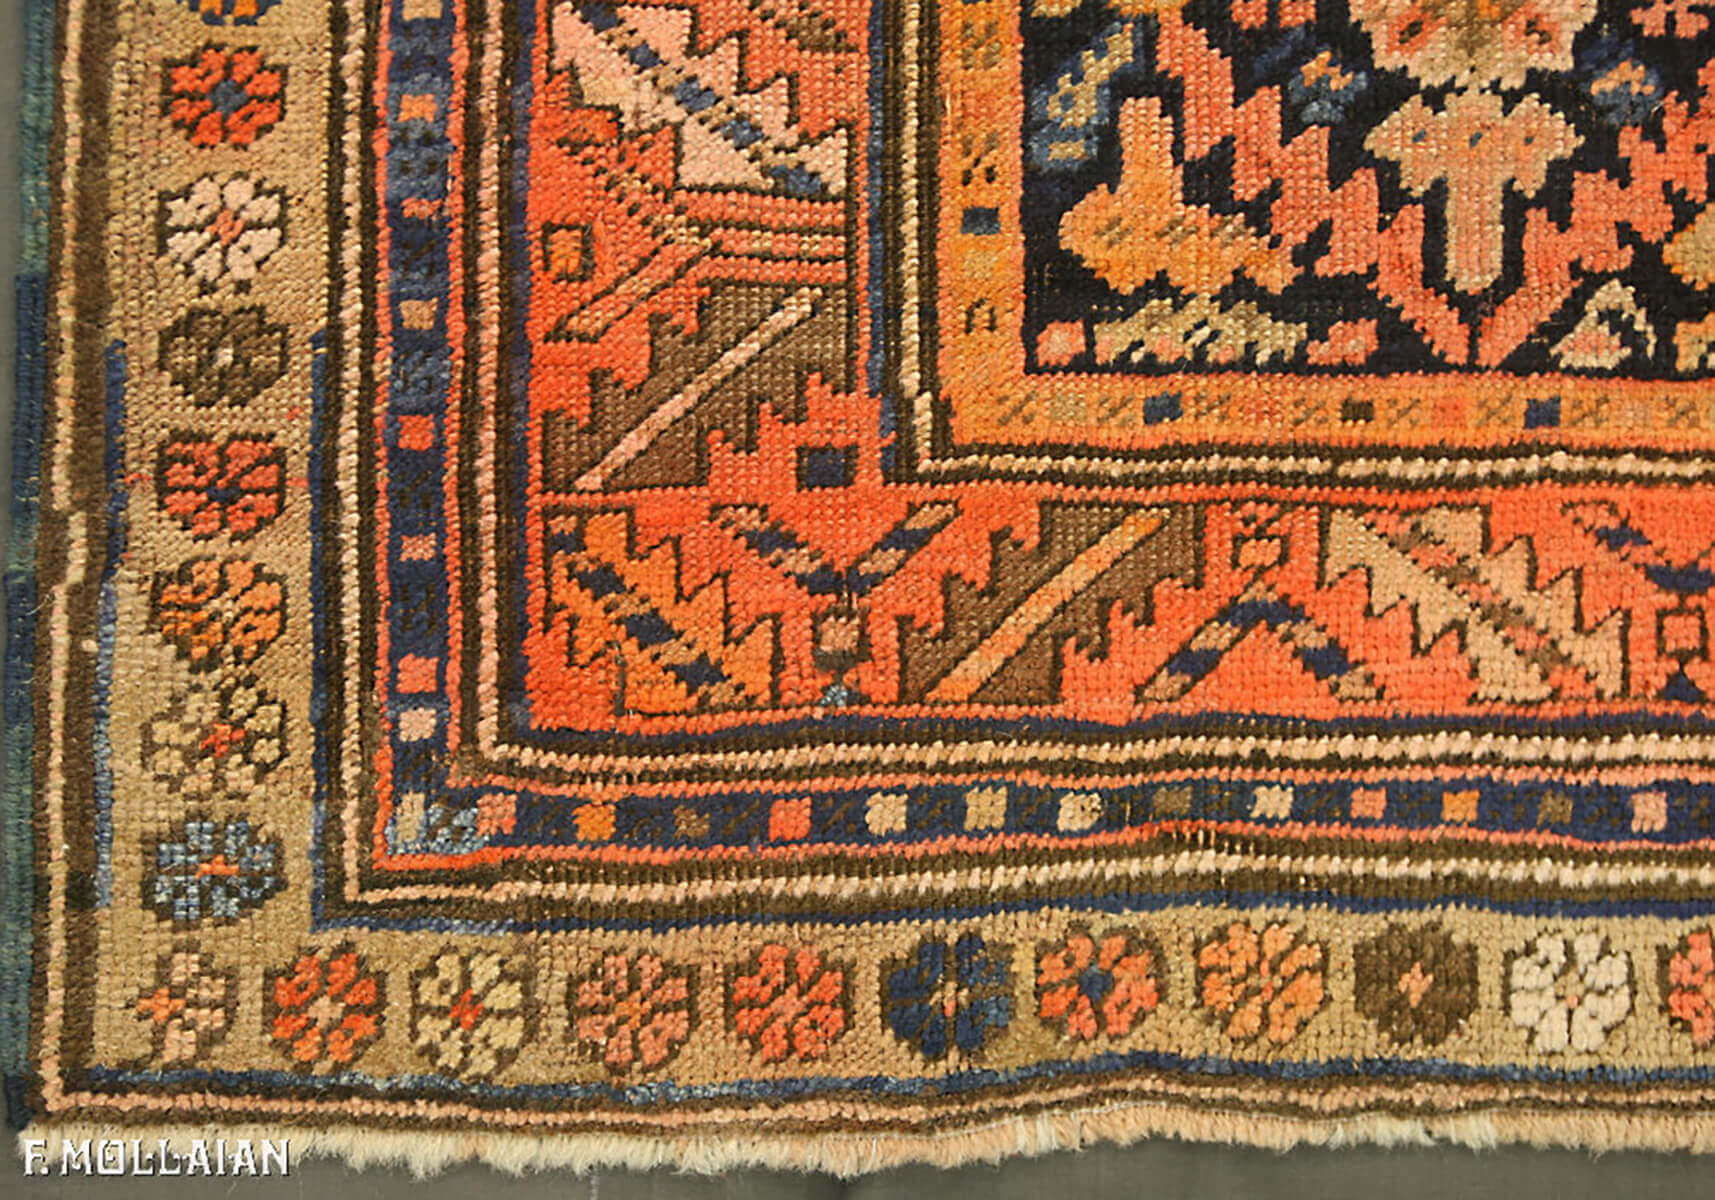 Antique Caucasian Karabakh (Qarabag) Rug n°:91220008